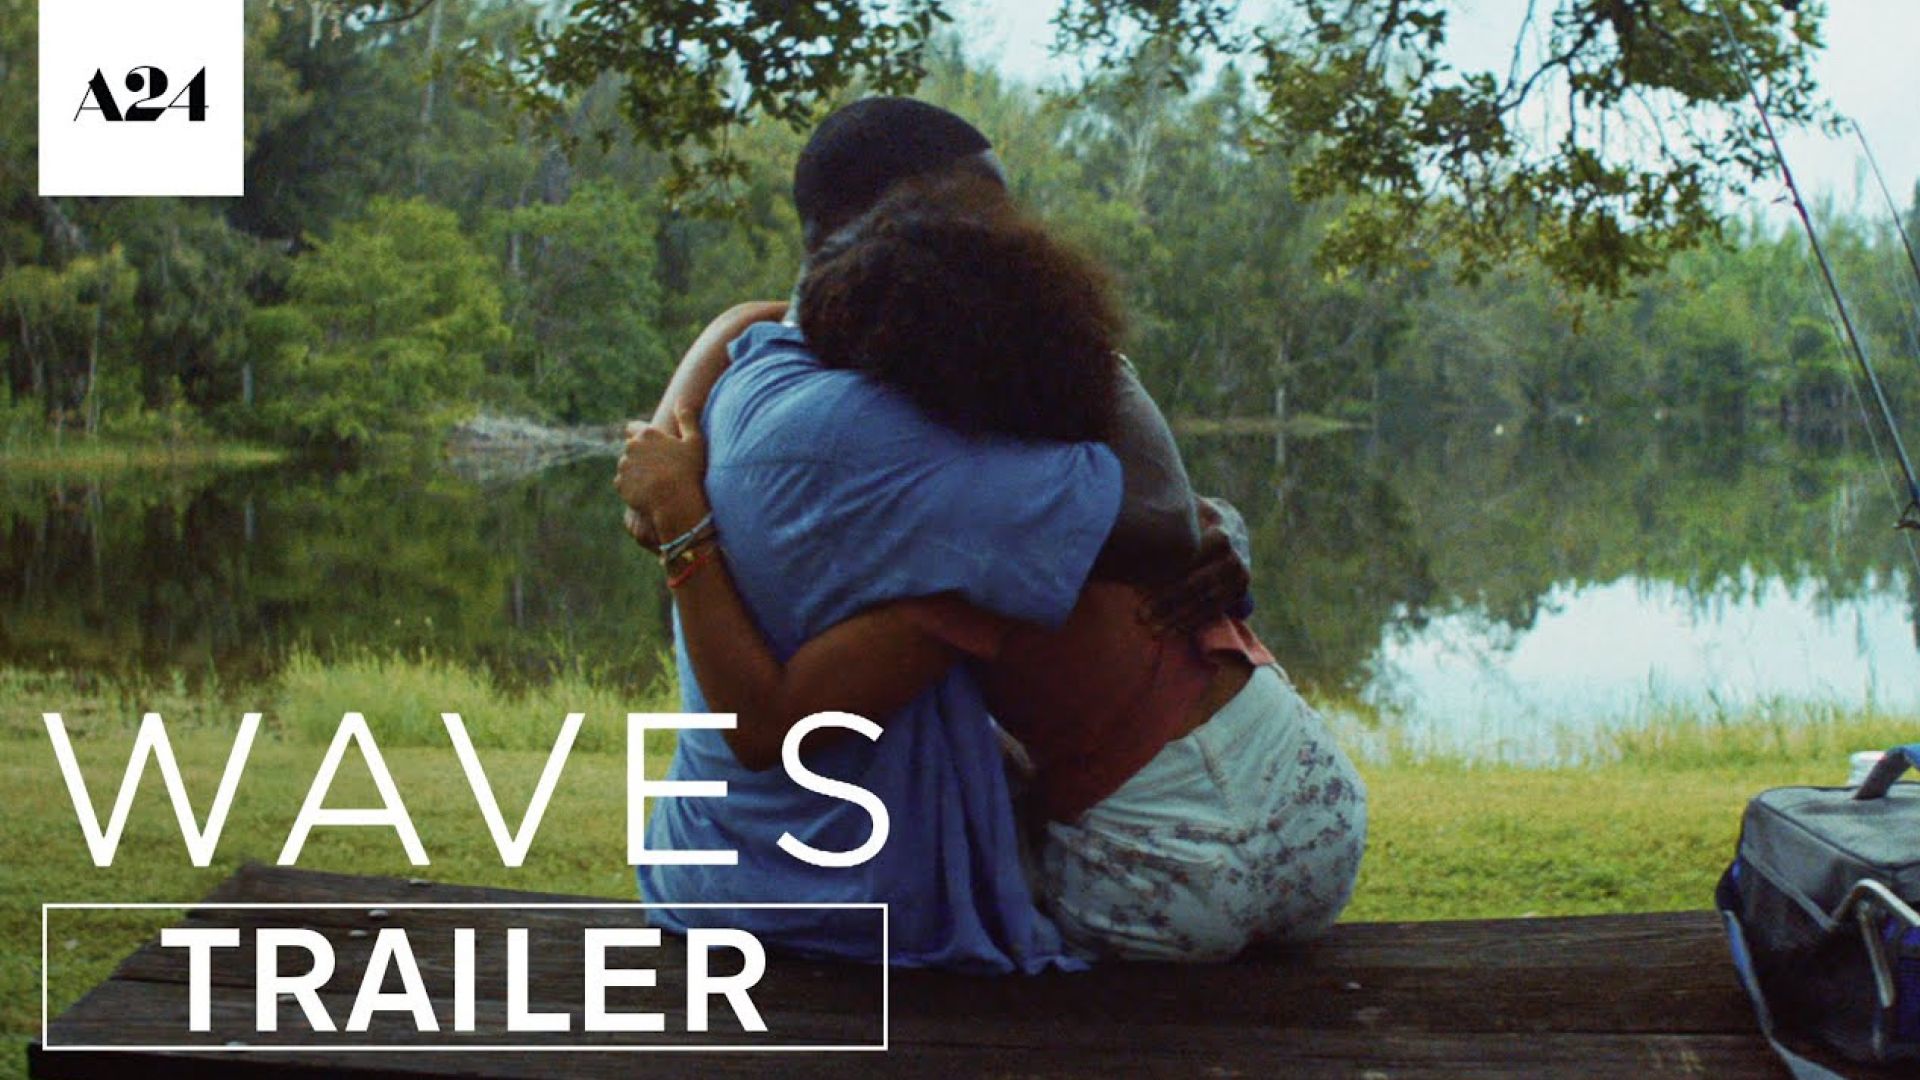 'Waves' trailer